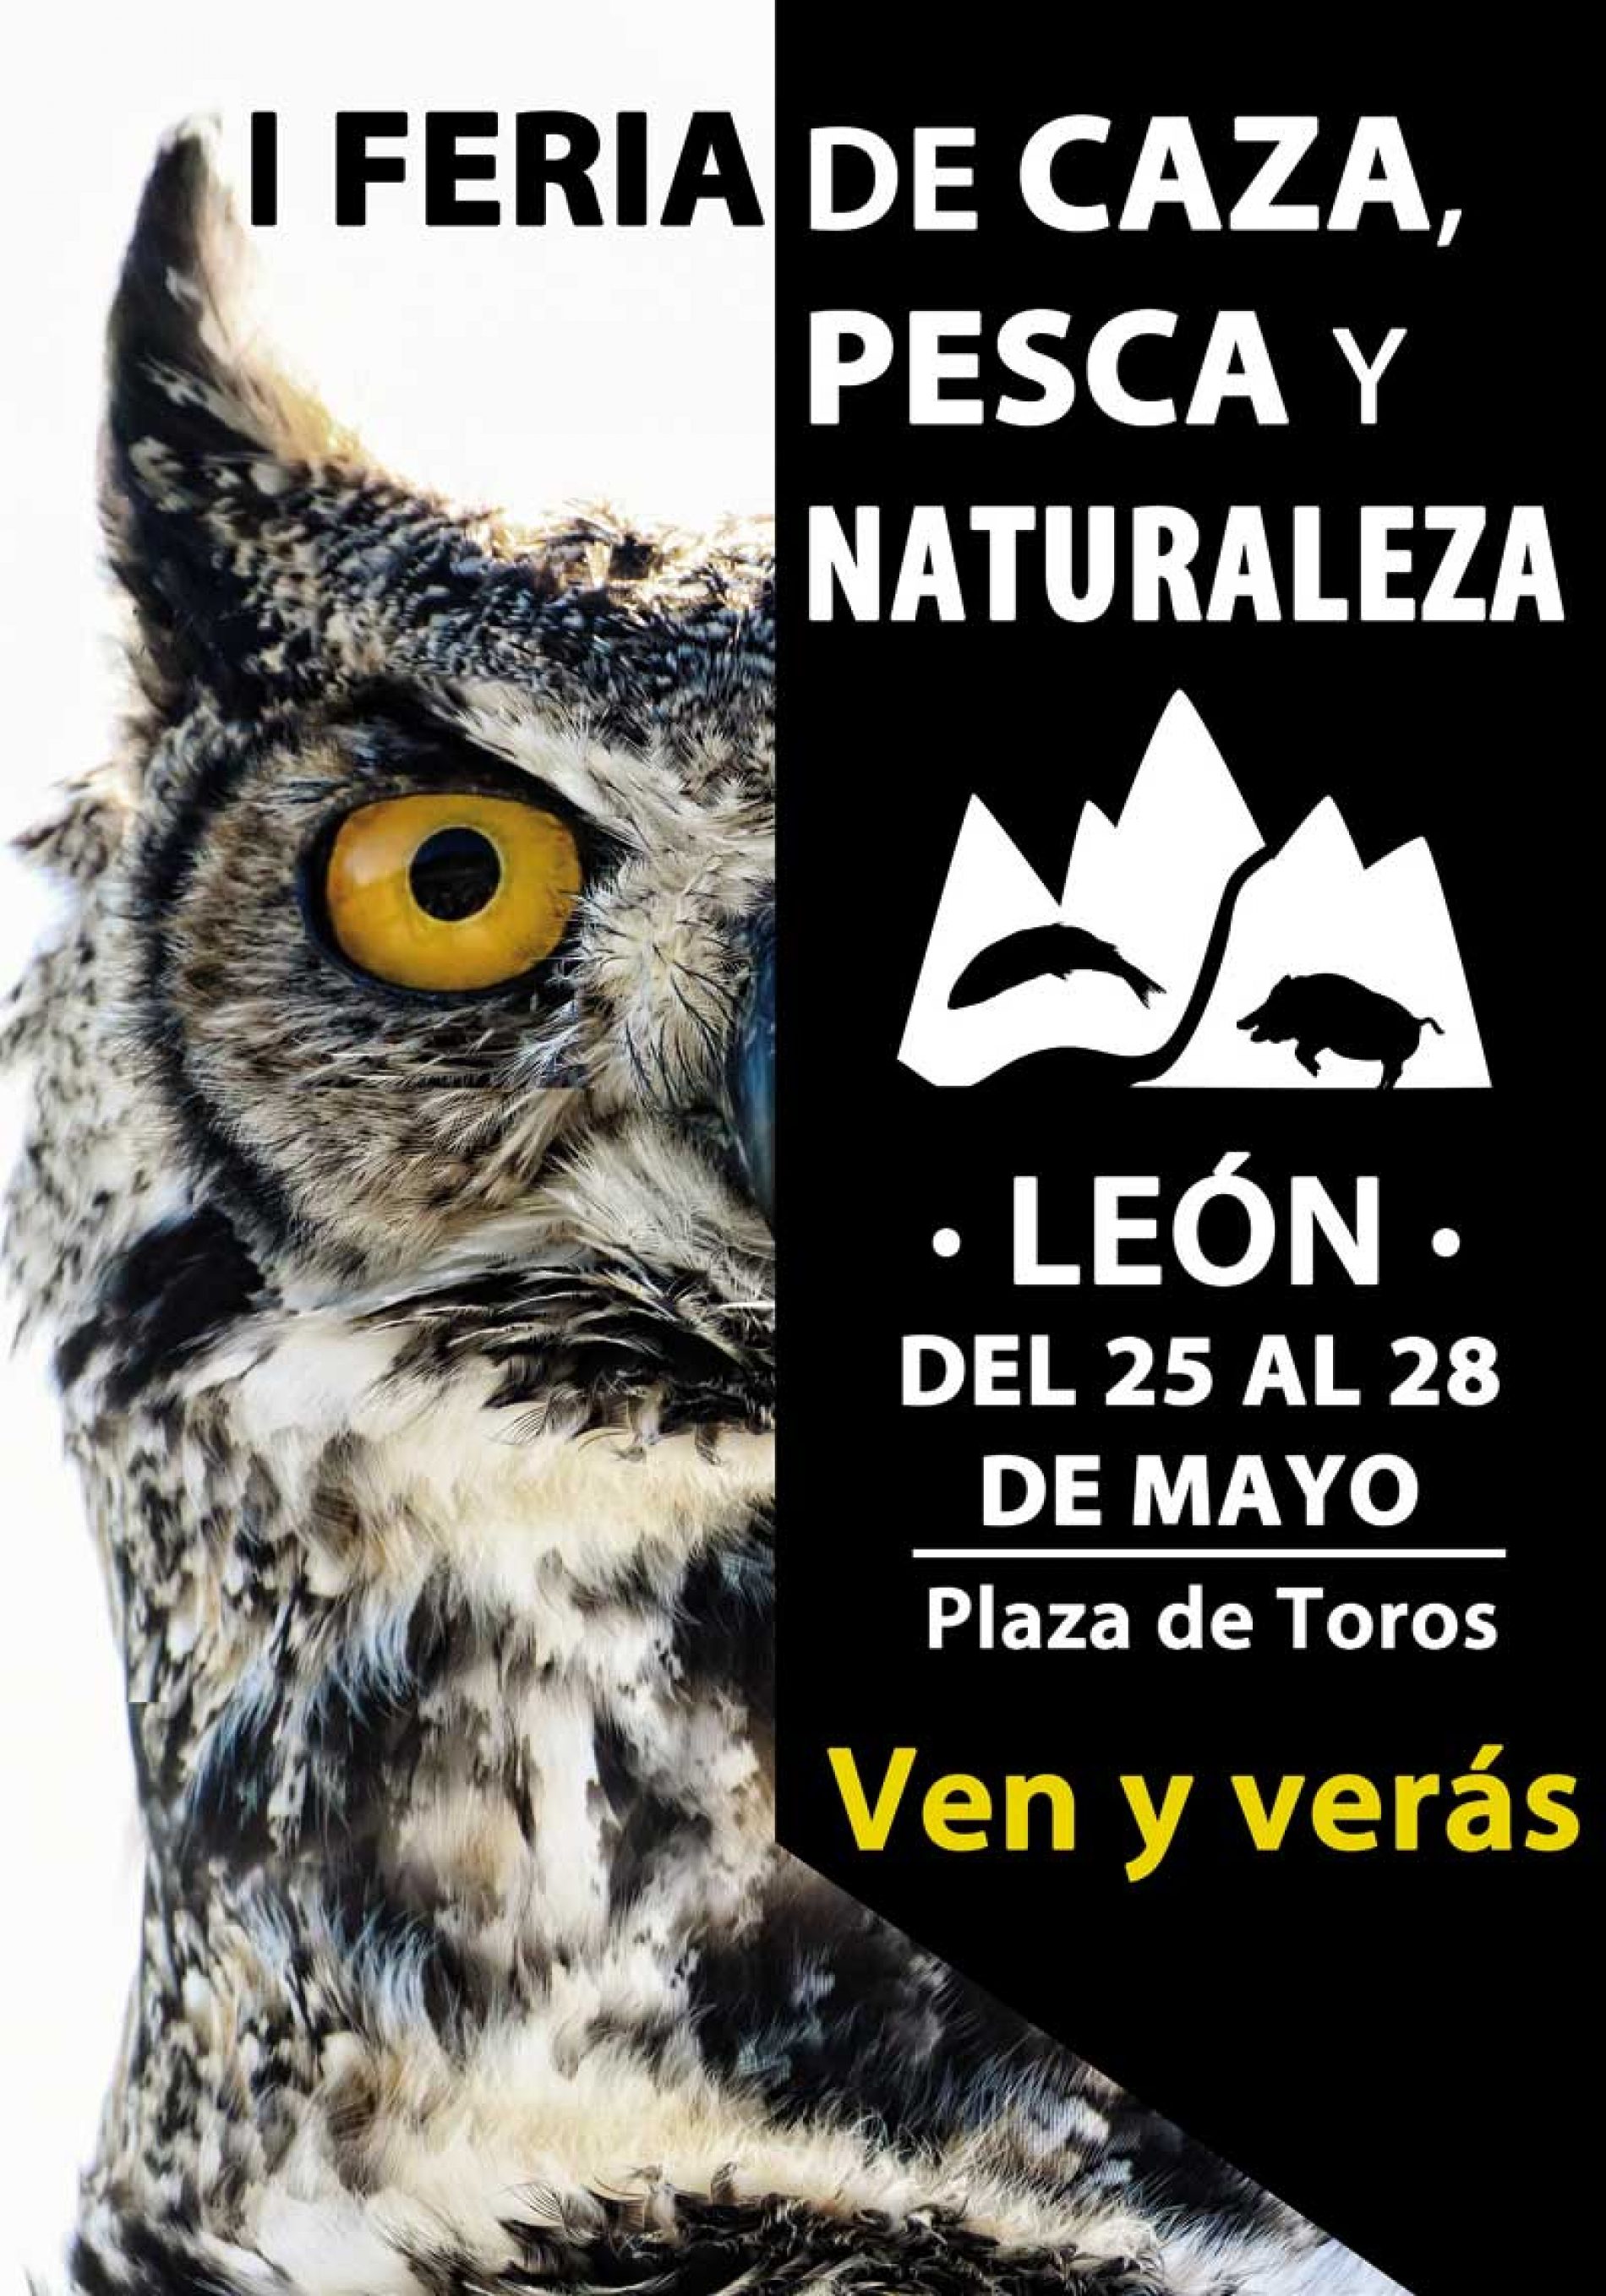 I Feria de Caza, Pesca y Naturaleza en León